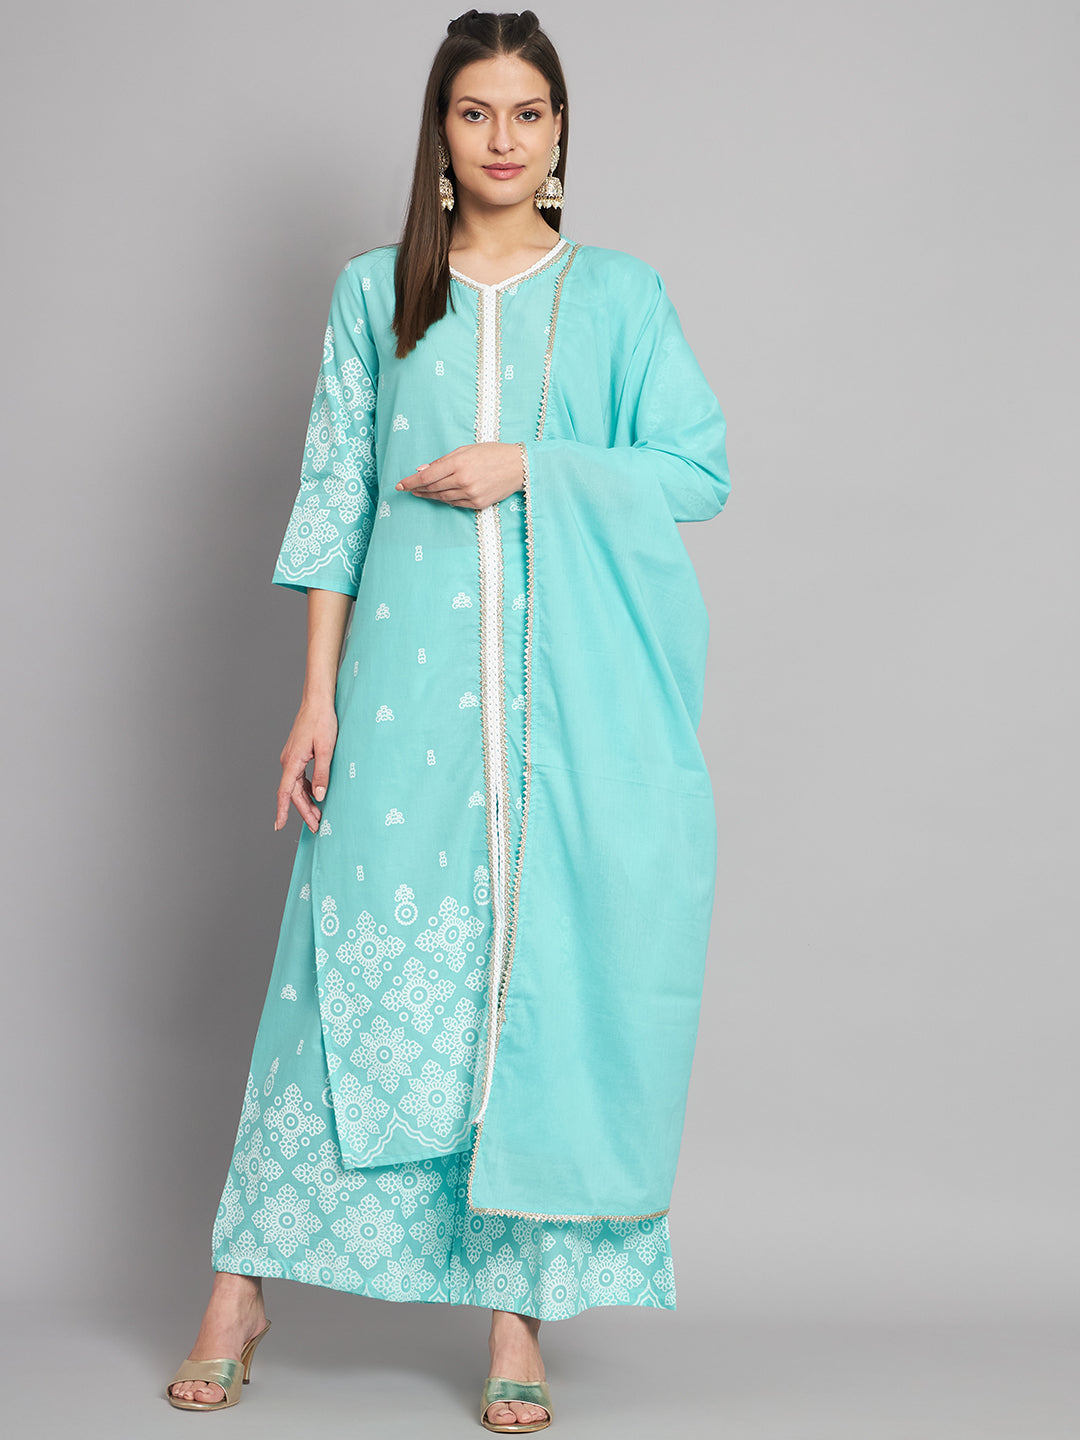 Buy online Patrorna Women Regular Fit Churidar Pant from Churidars &  Salwars for Women by Patrorna for ₹700 at 65% off